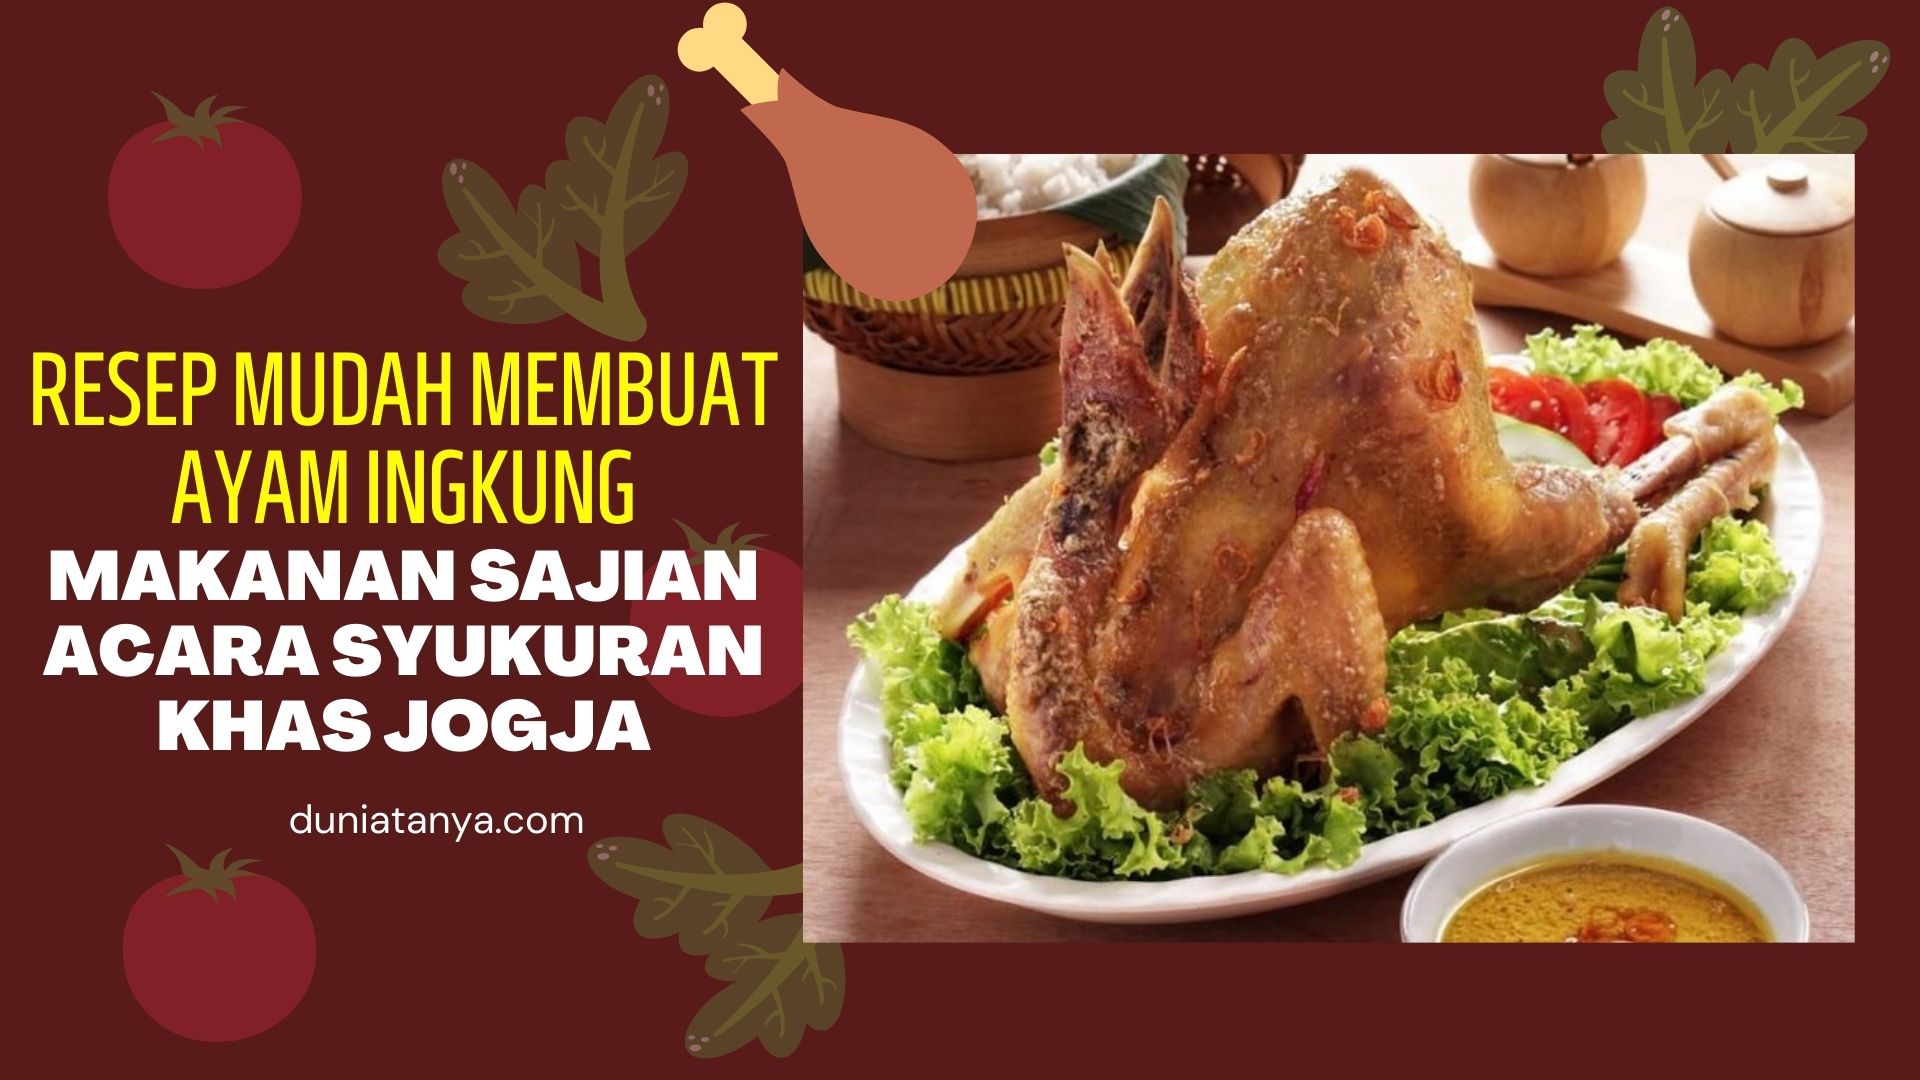 You are currently viewing Resep Mudah Membuat Ayam Ingkung,Makanan Sajian Acara Syukuran Khas Jogja